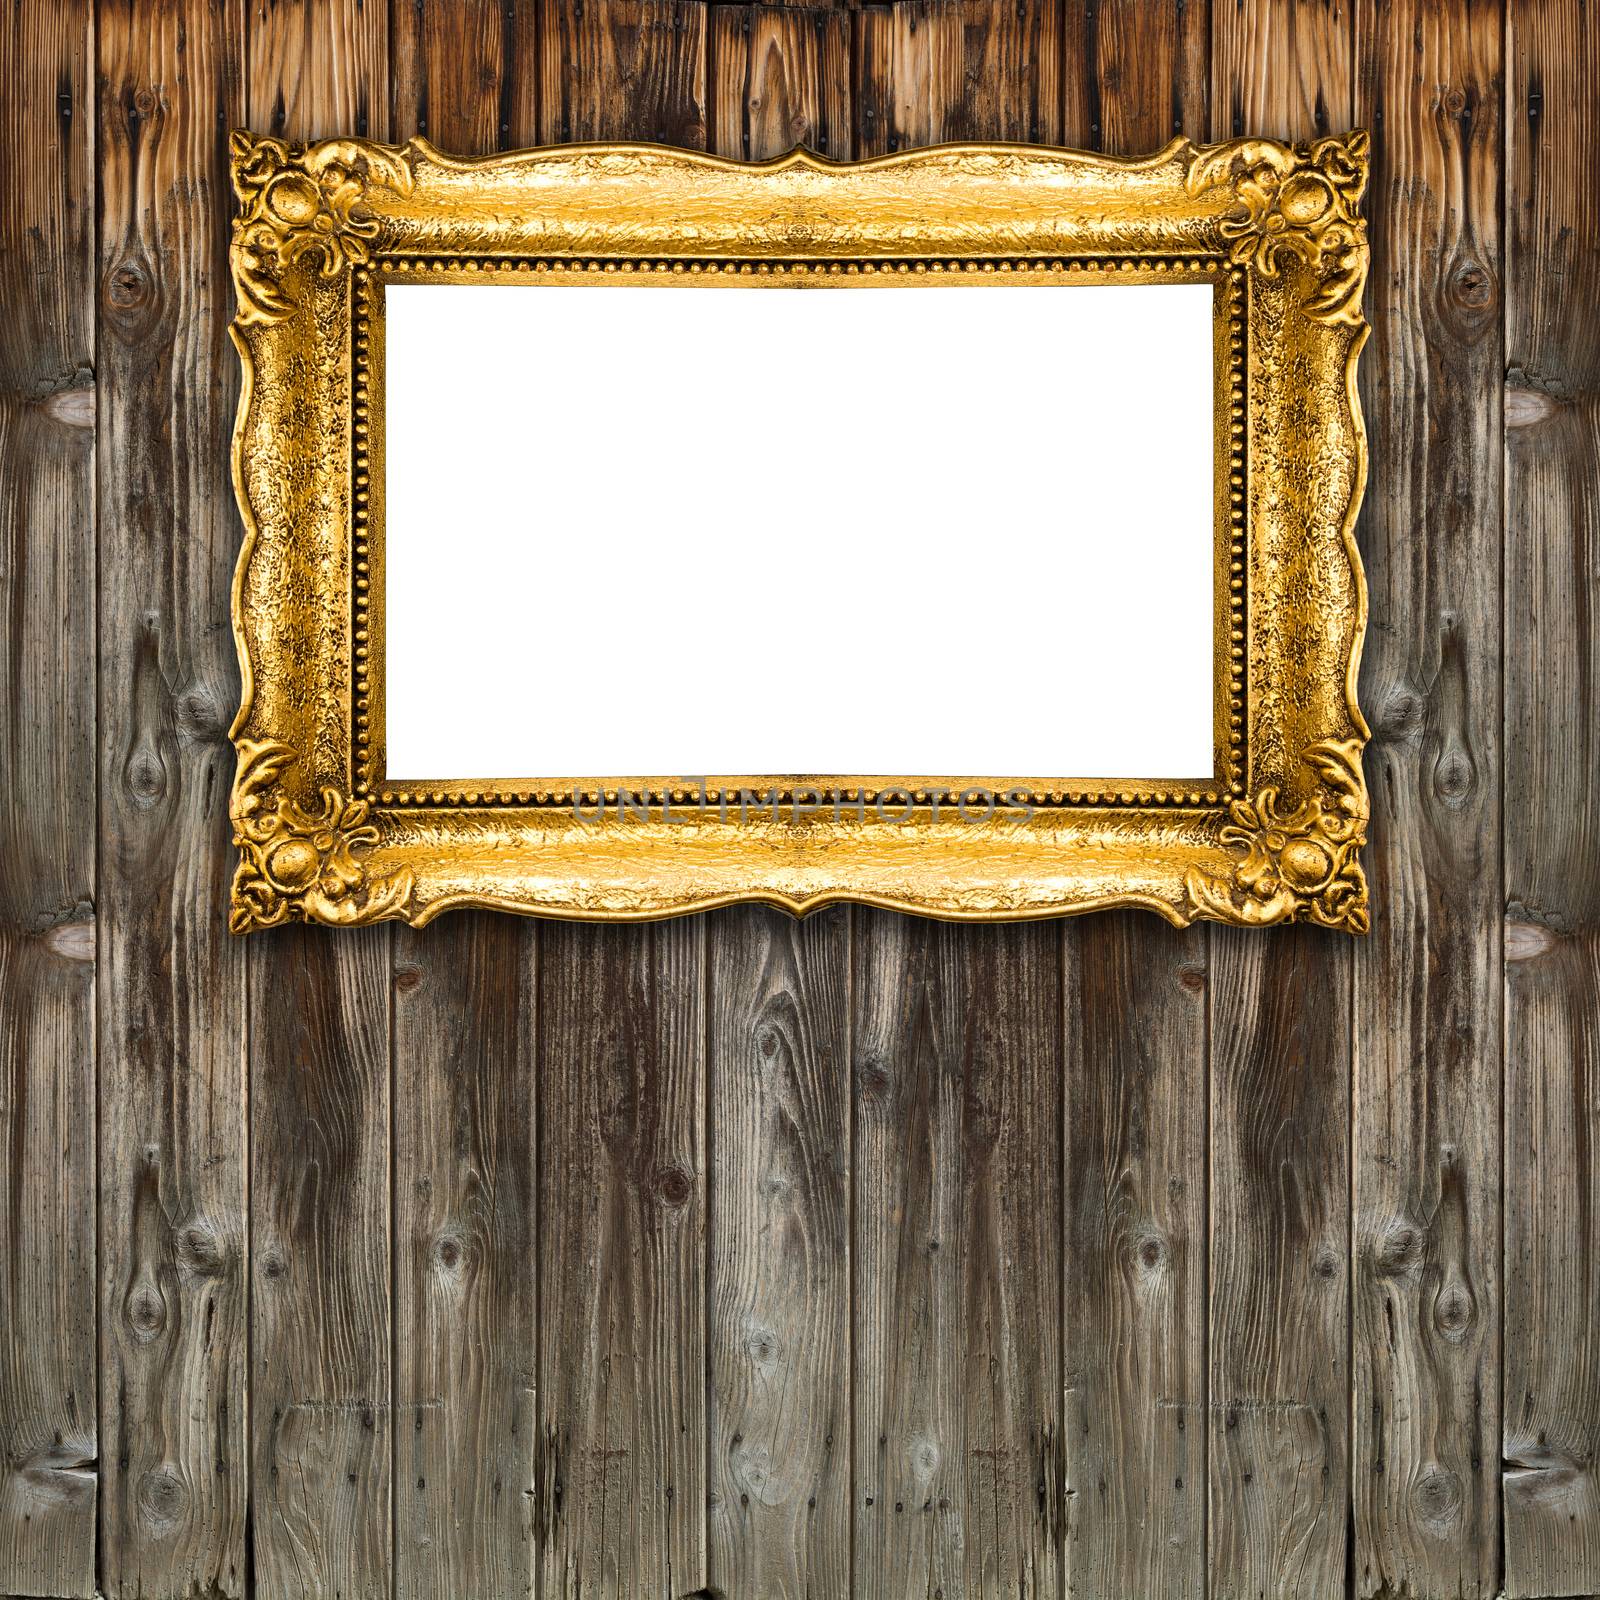 Big Picture Frame Old Gold on wood background, white inside mock up